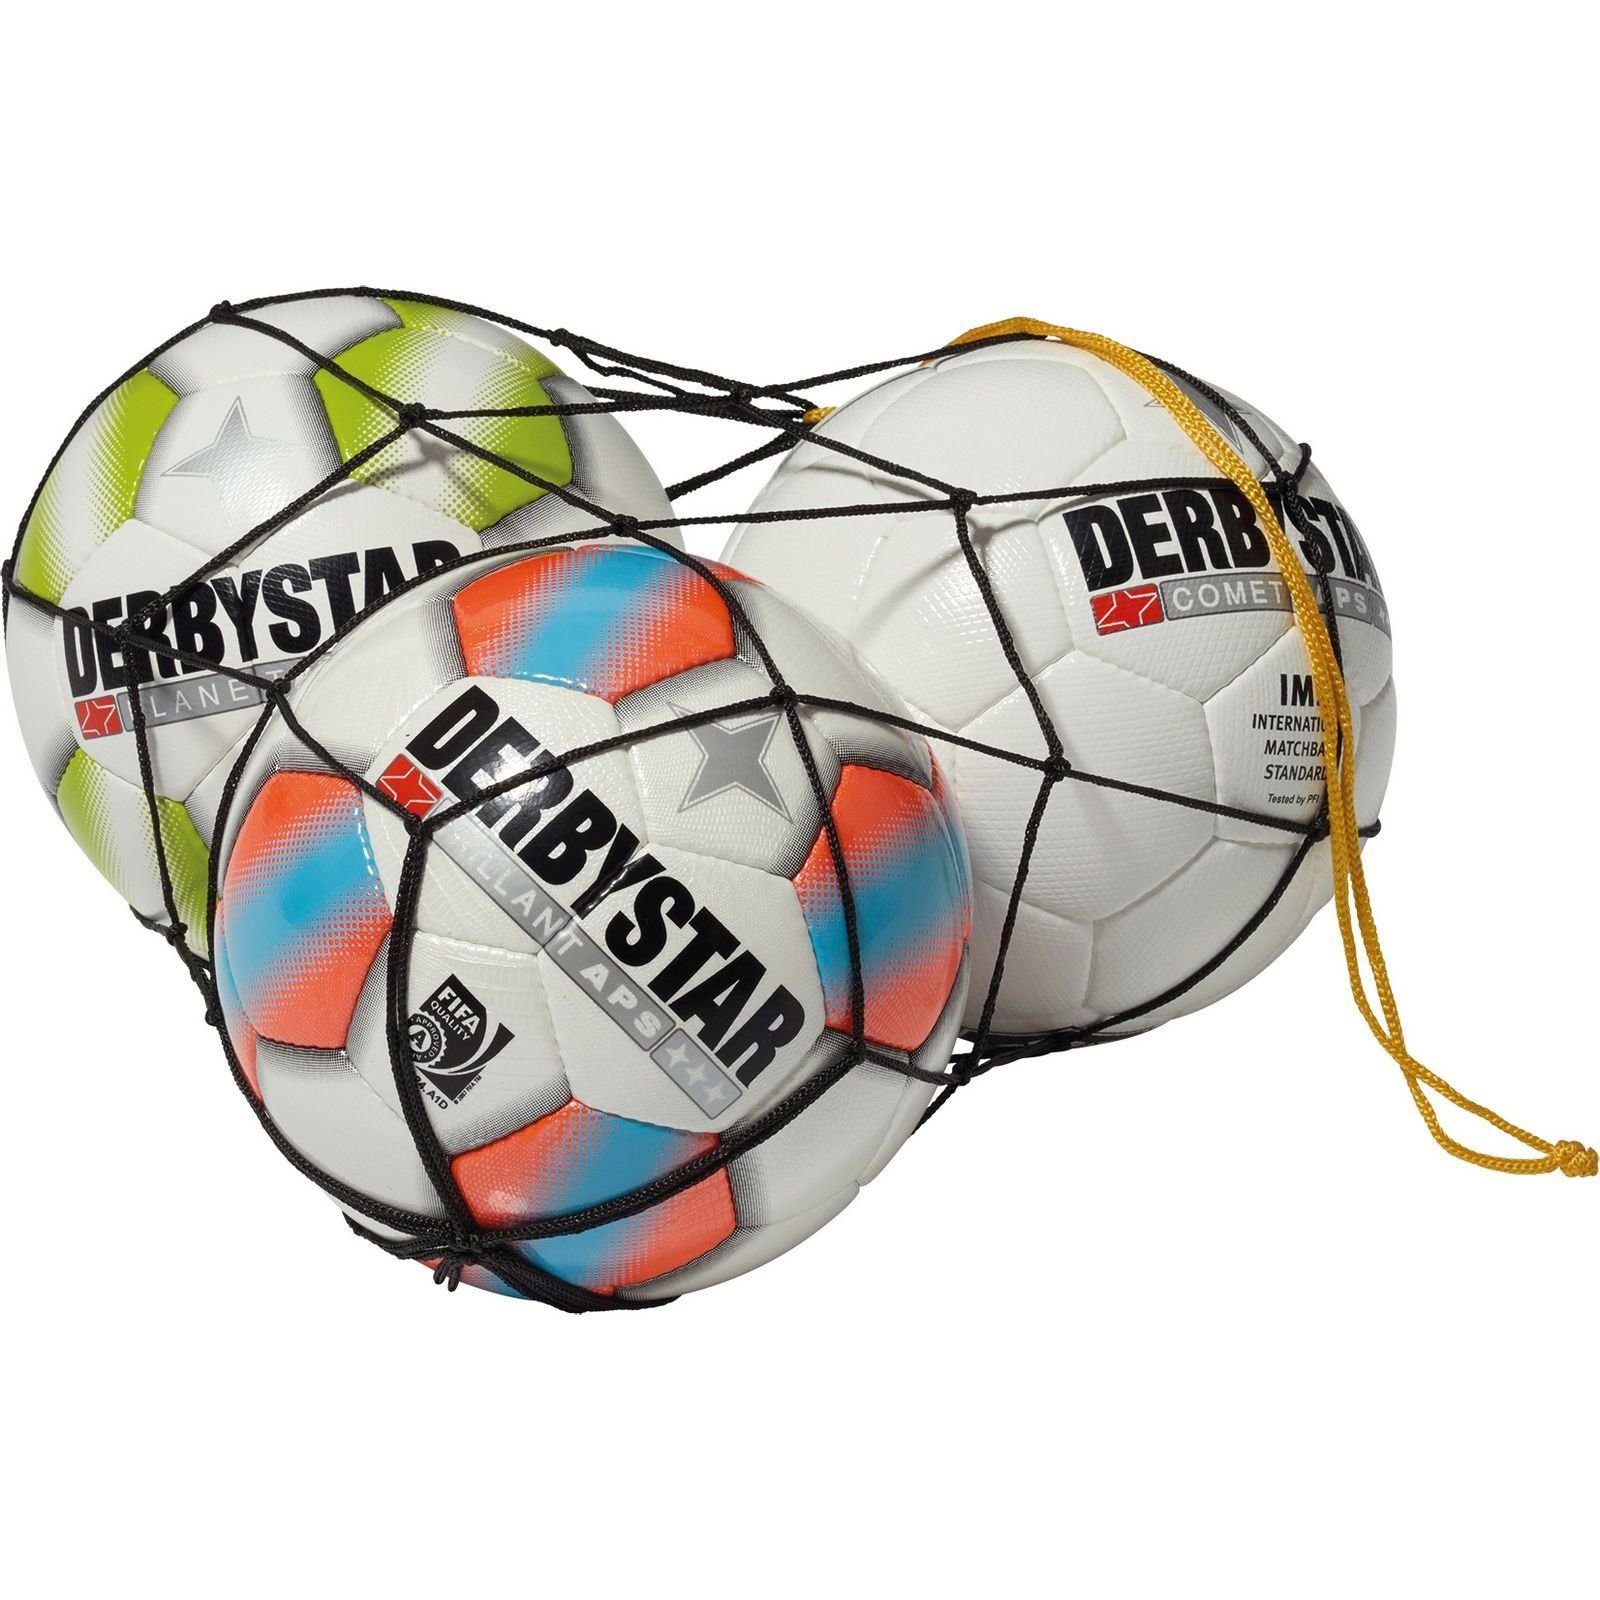 Basketballnetz Ballnetz für Derbystar Polyester, Fußbälle